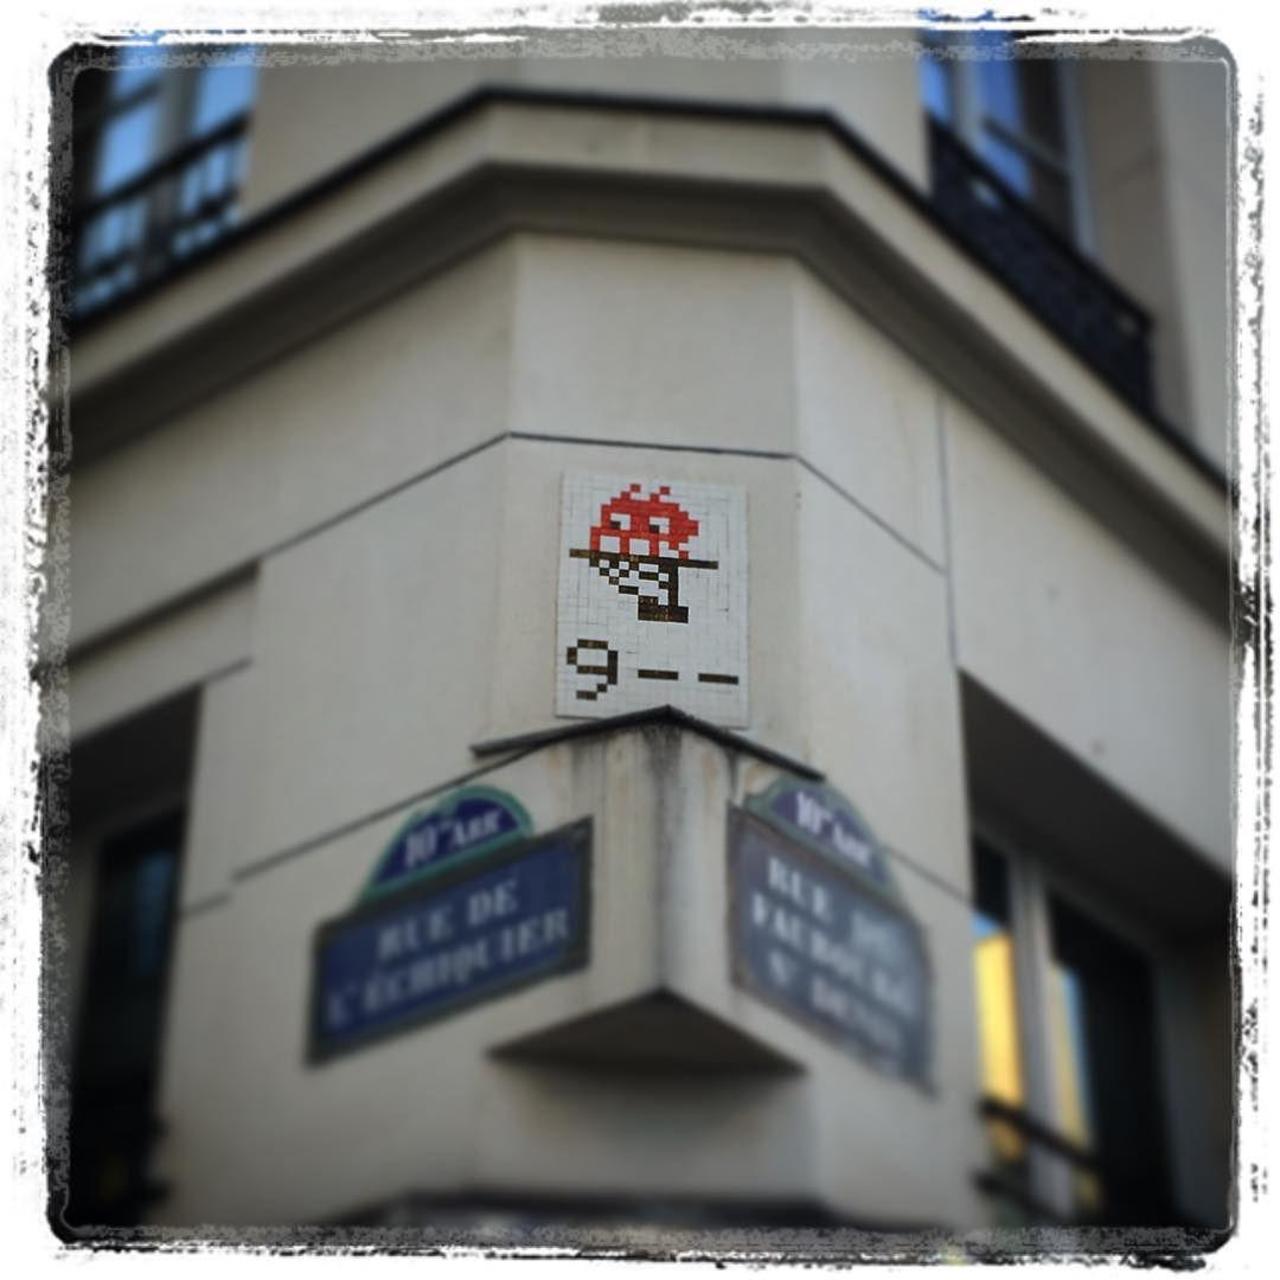 #Paris #graffiti photo by @gabyinparis http://ift.tt/1PCypiK #StreetArt https://t.co/0Y6Vy1HSYx